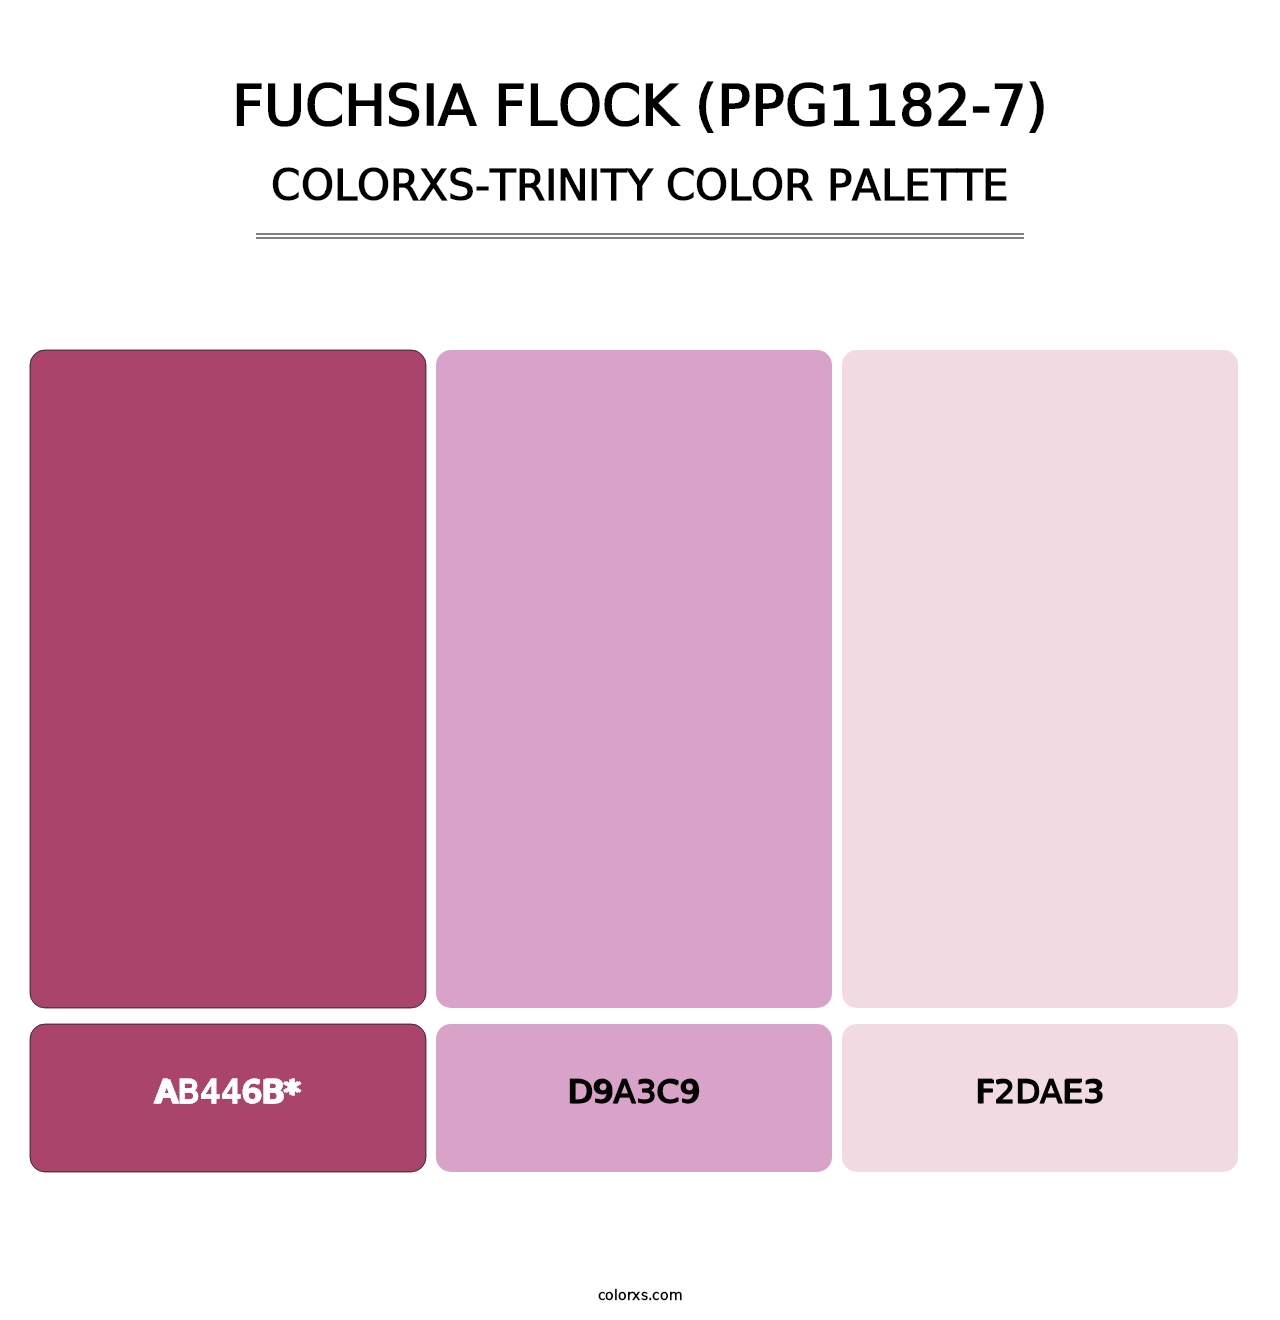 Fuchsia Flock (PPG1182-7) - Colorxs Trinity Palette